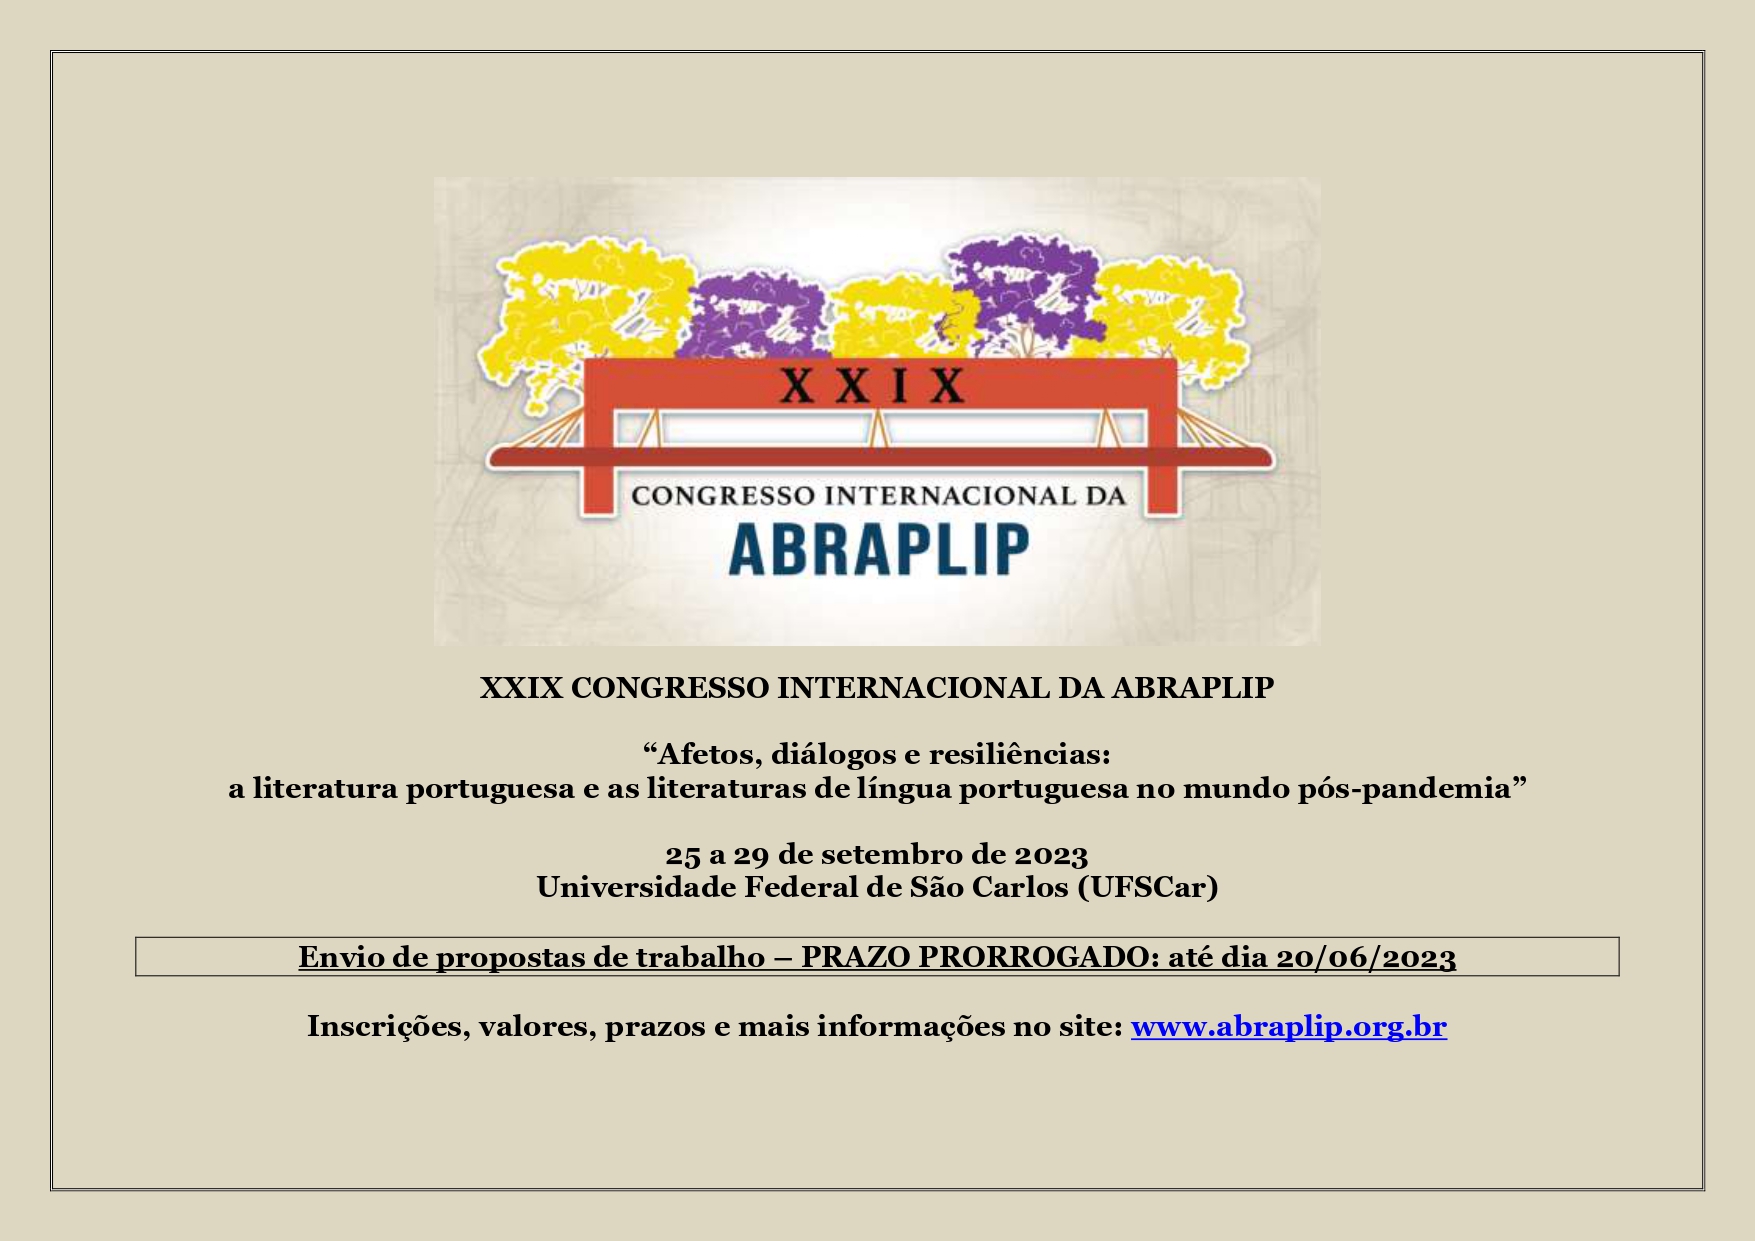 XXIX CONGRESSO INTERNACIONAL DA ABRAPLIP